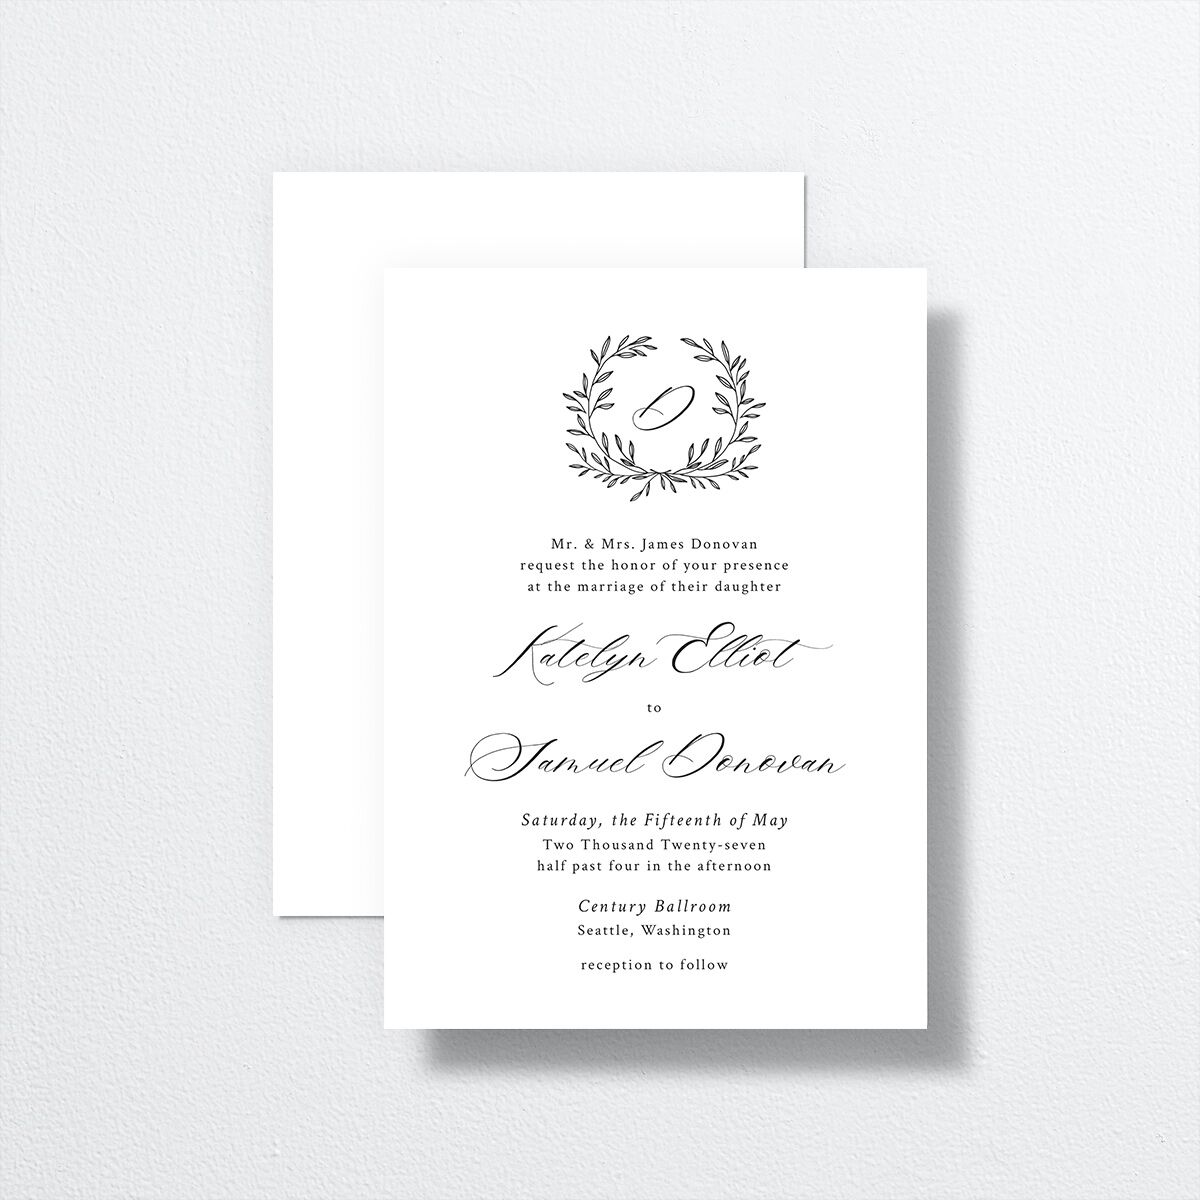 Monogram Wreath Wedding Invitations front-and-back